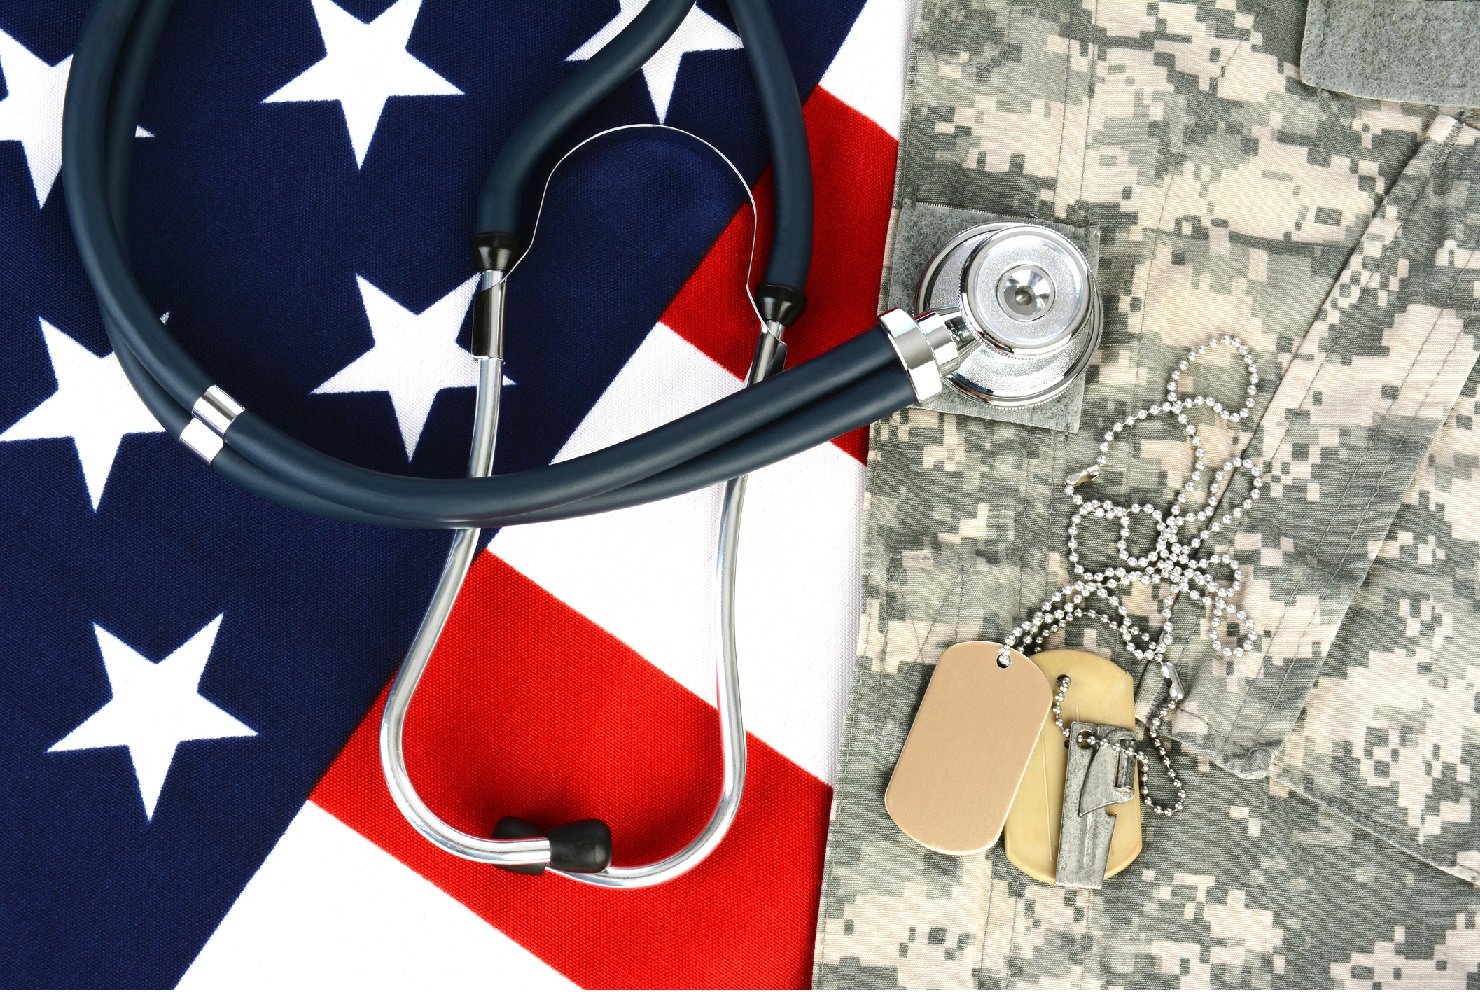 Veterans Health Department of Veterans Affairs Stethoscope on flag and uniform